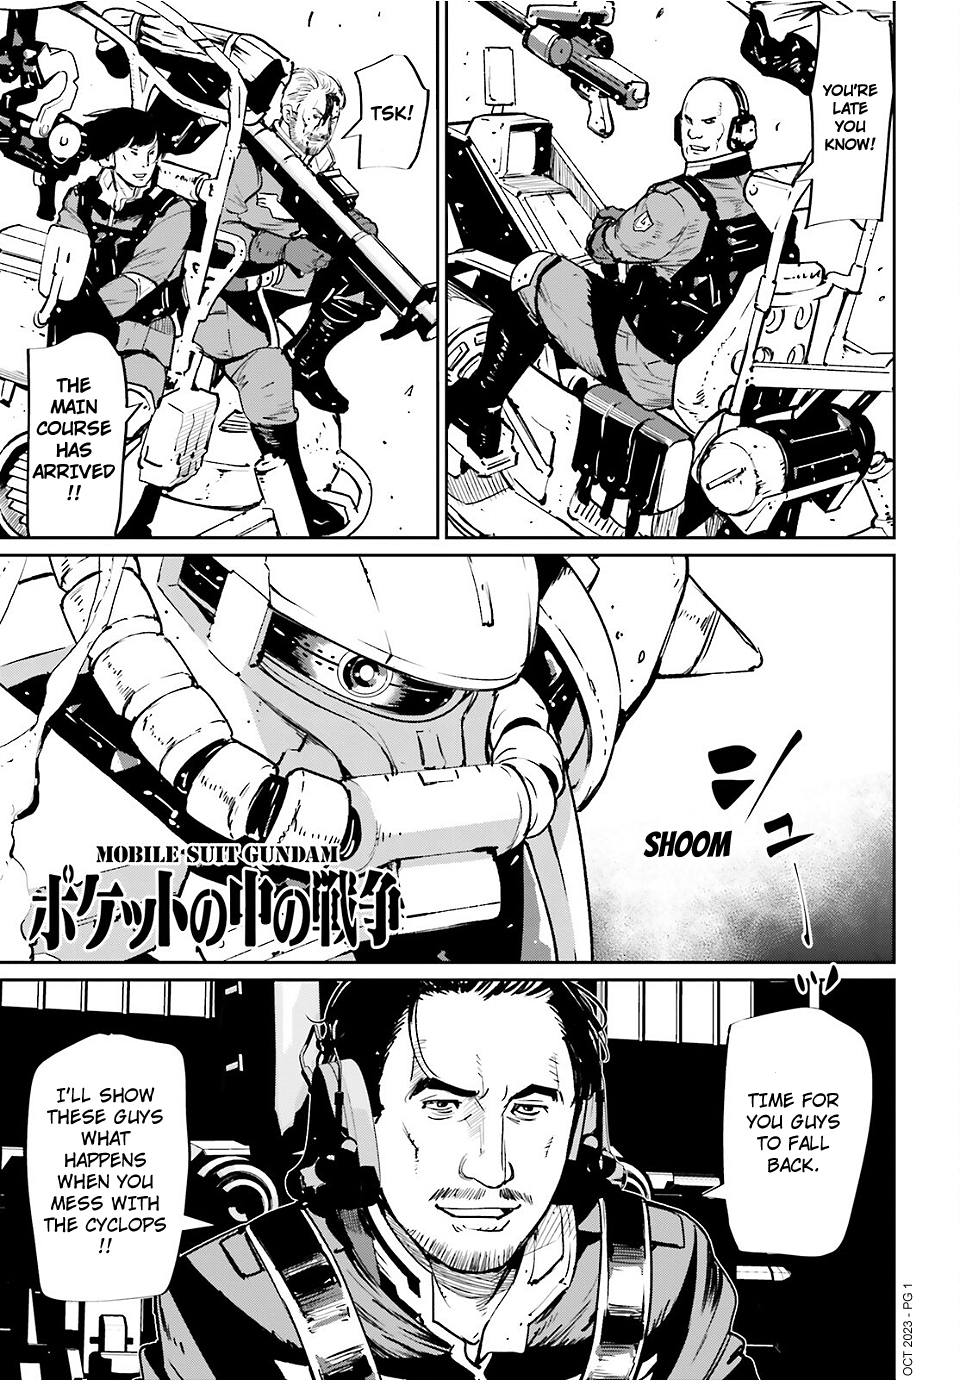 Mobile Suit Gundam 0080 - War in the Pocket (TAMAKOSHI Hiroyuki) 14